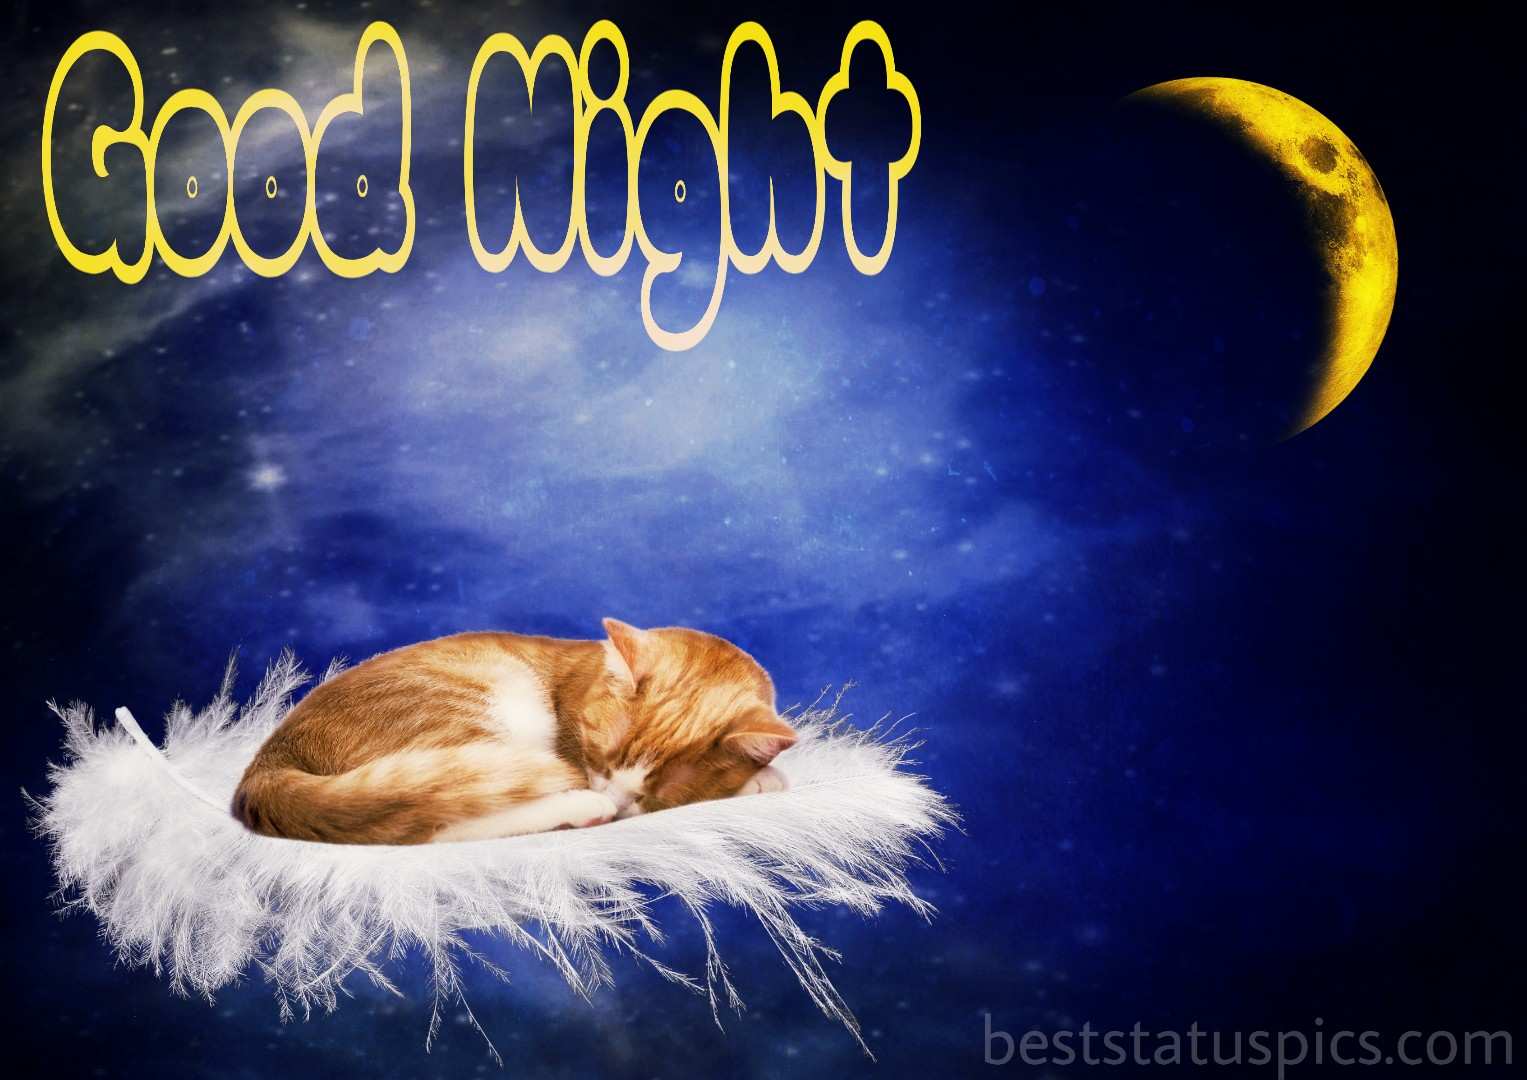 51 Beautiful Good Night Hd Images With Cat Kitty Kitten Best Status Pics